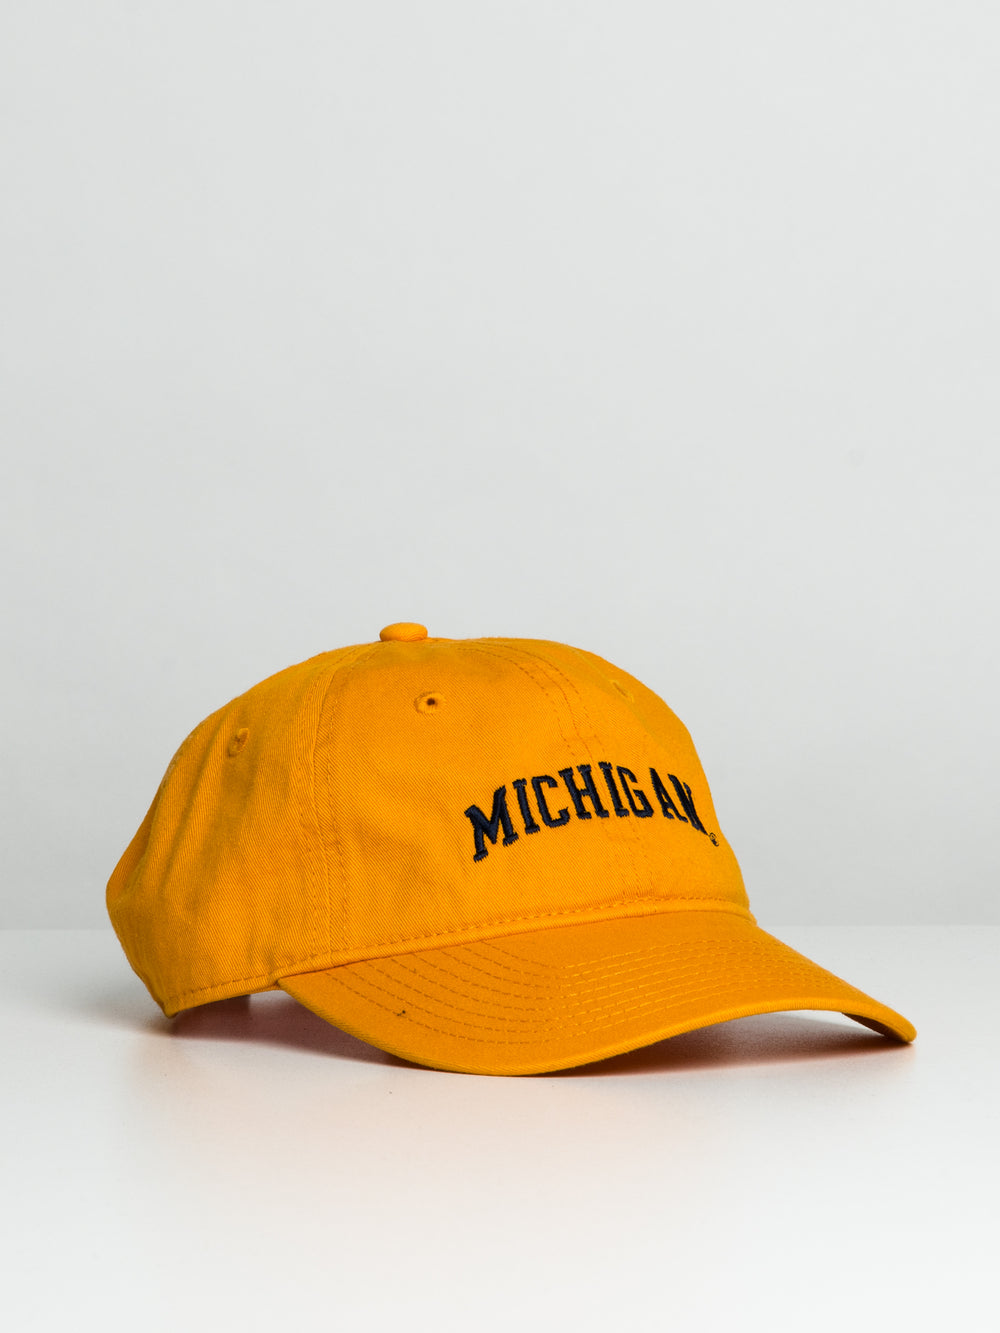 CHAMPION MICHIGAN ADJUSTABLE TWILL HAT - CLEARANCE